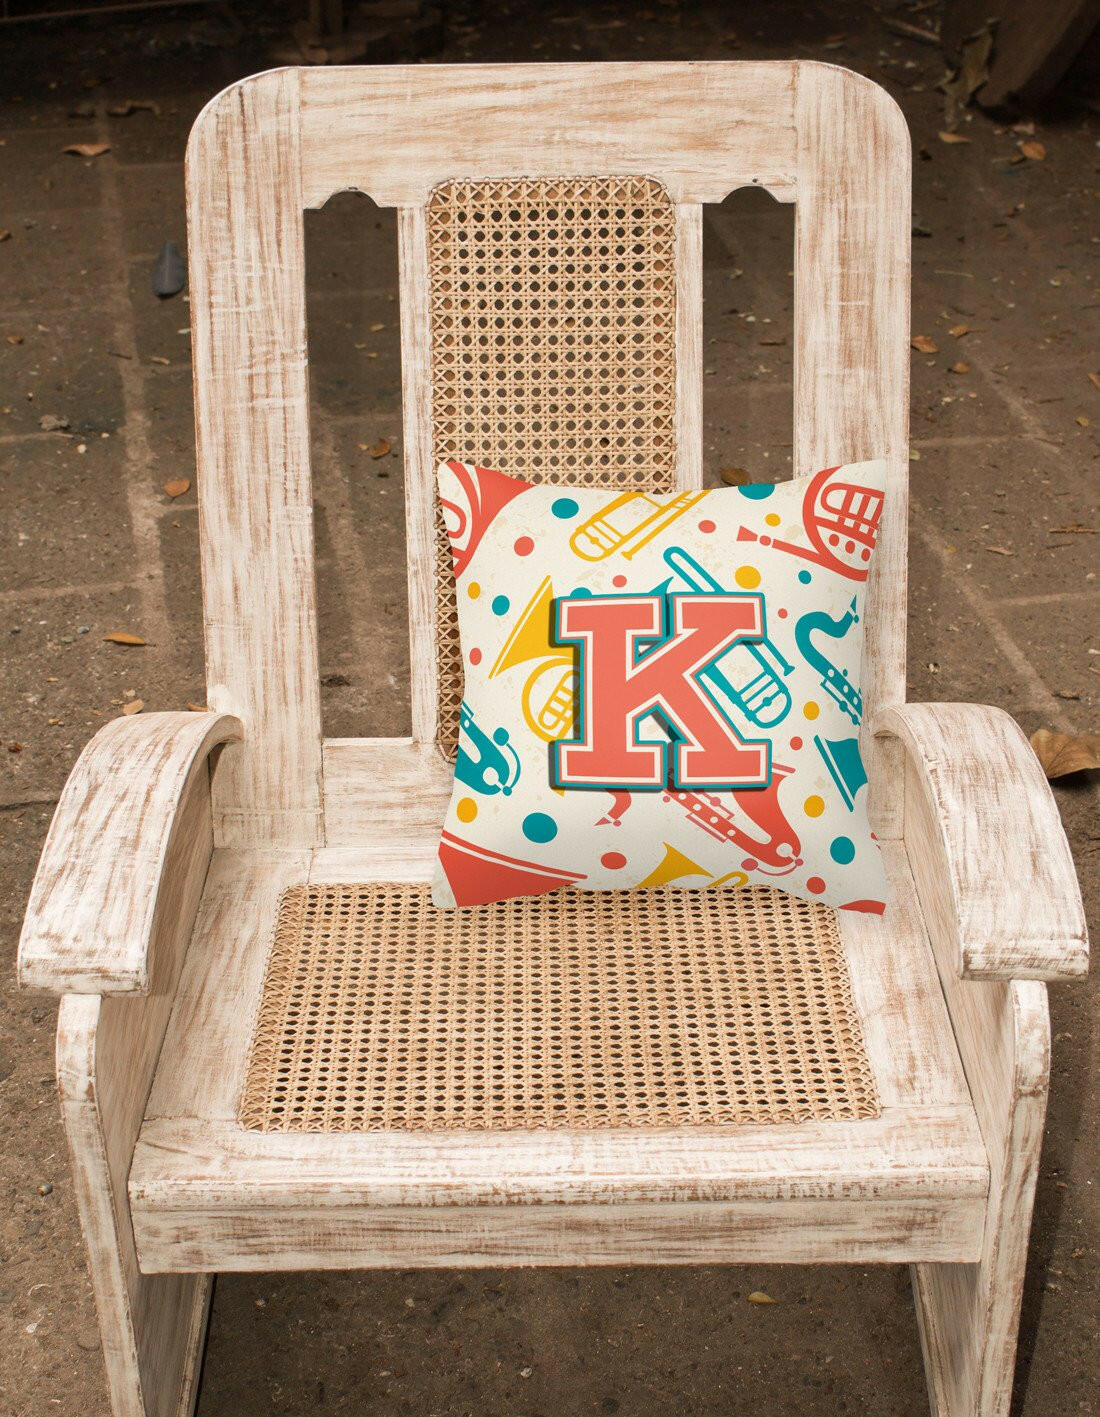 Letter K Retro Teal Orange Musical Instruments Initial Canvas Fabric Decorative Pillow CJ2001-KPW1414 by Caroline's Treasures